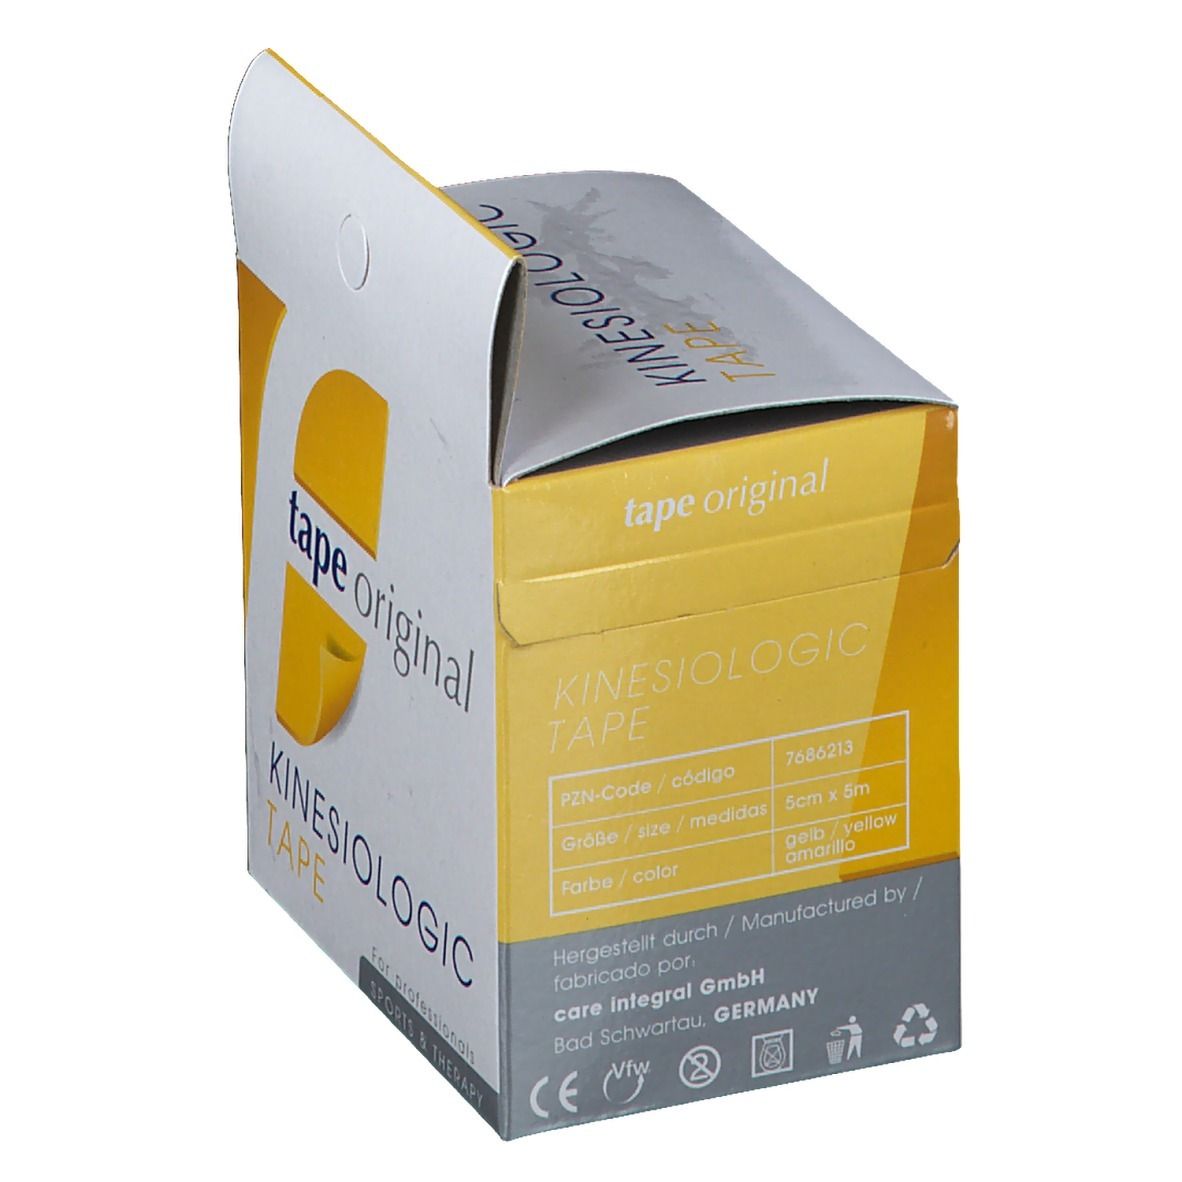 Kinesio tape original Kinesiologic Tape gelb 5 cm x 5 m